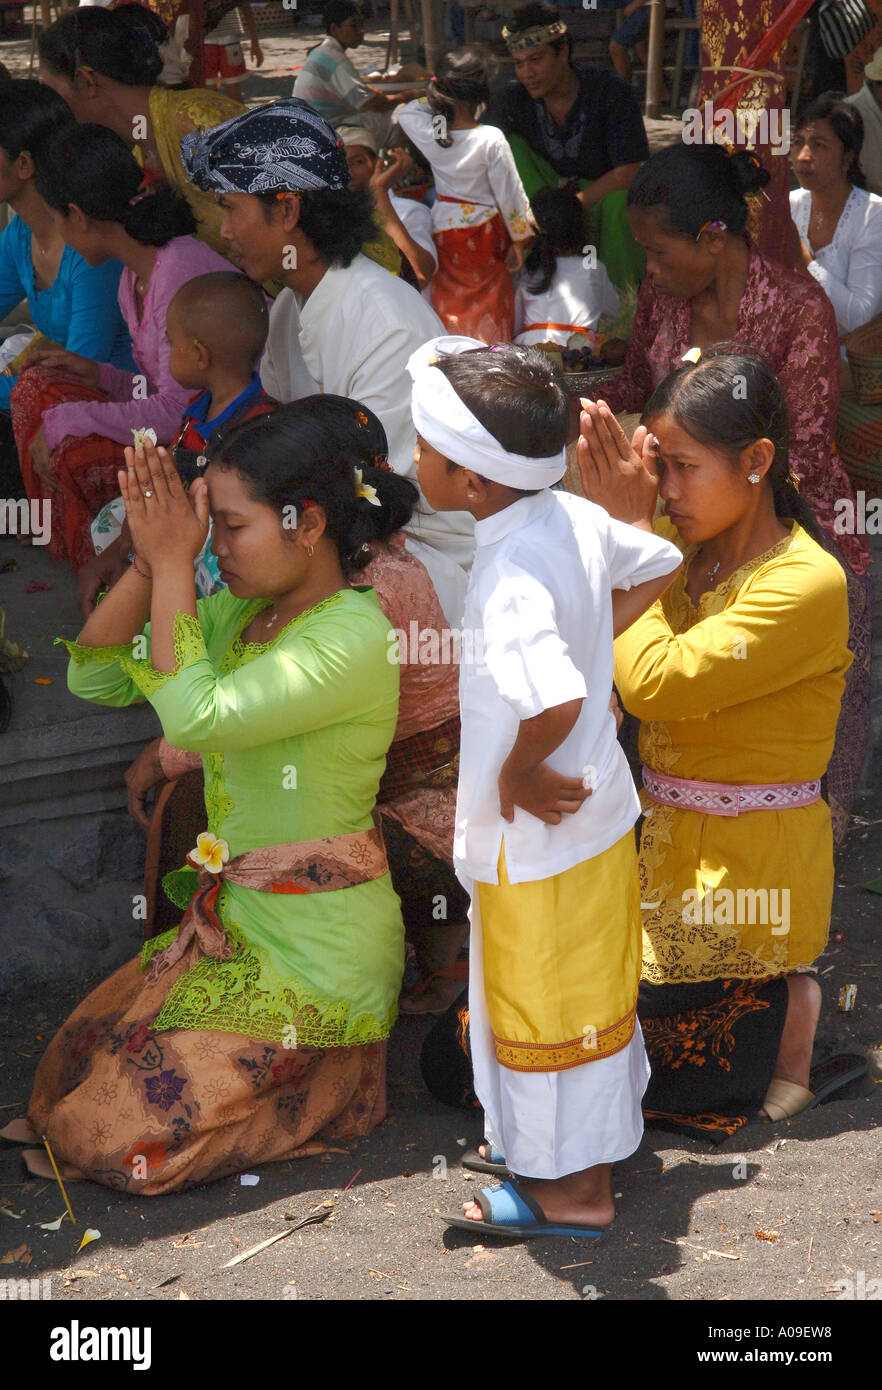 Balinese women praying at open air hindu religious festival, Bali Indonesia  Stock Photo - Alamy